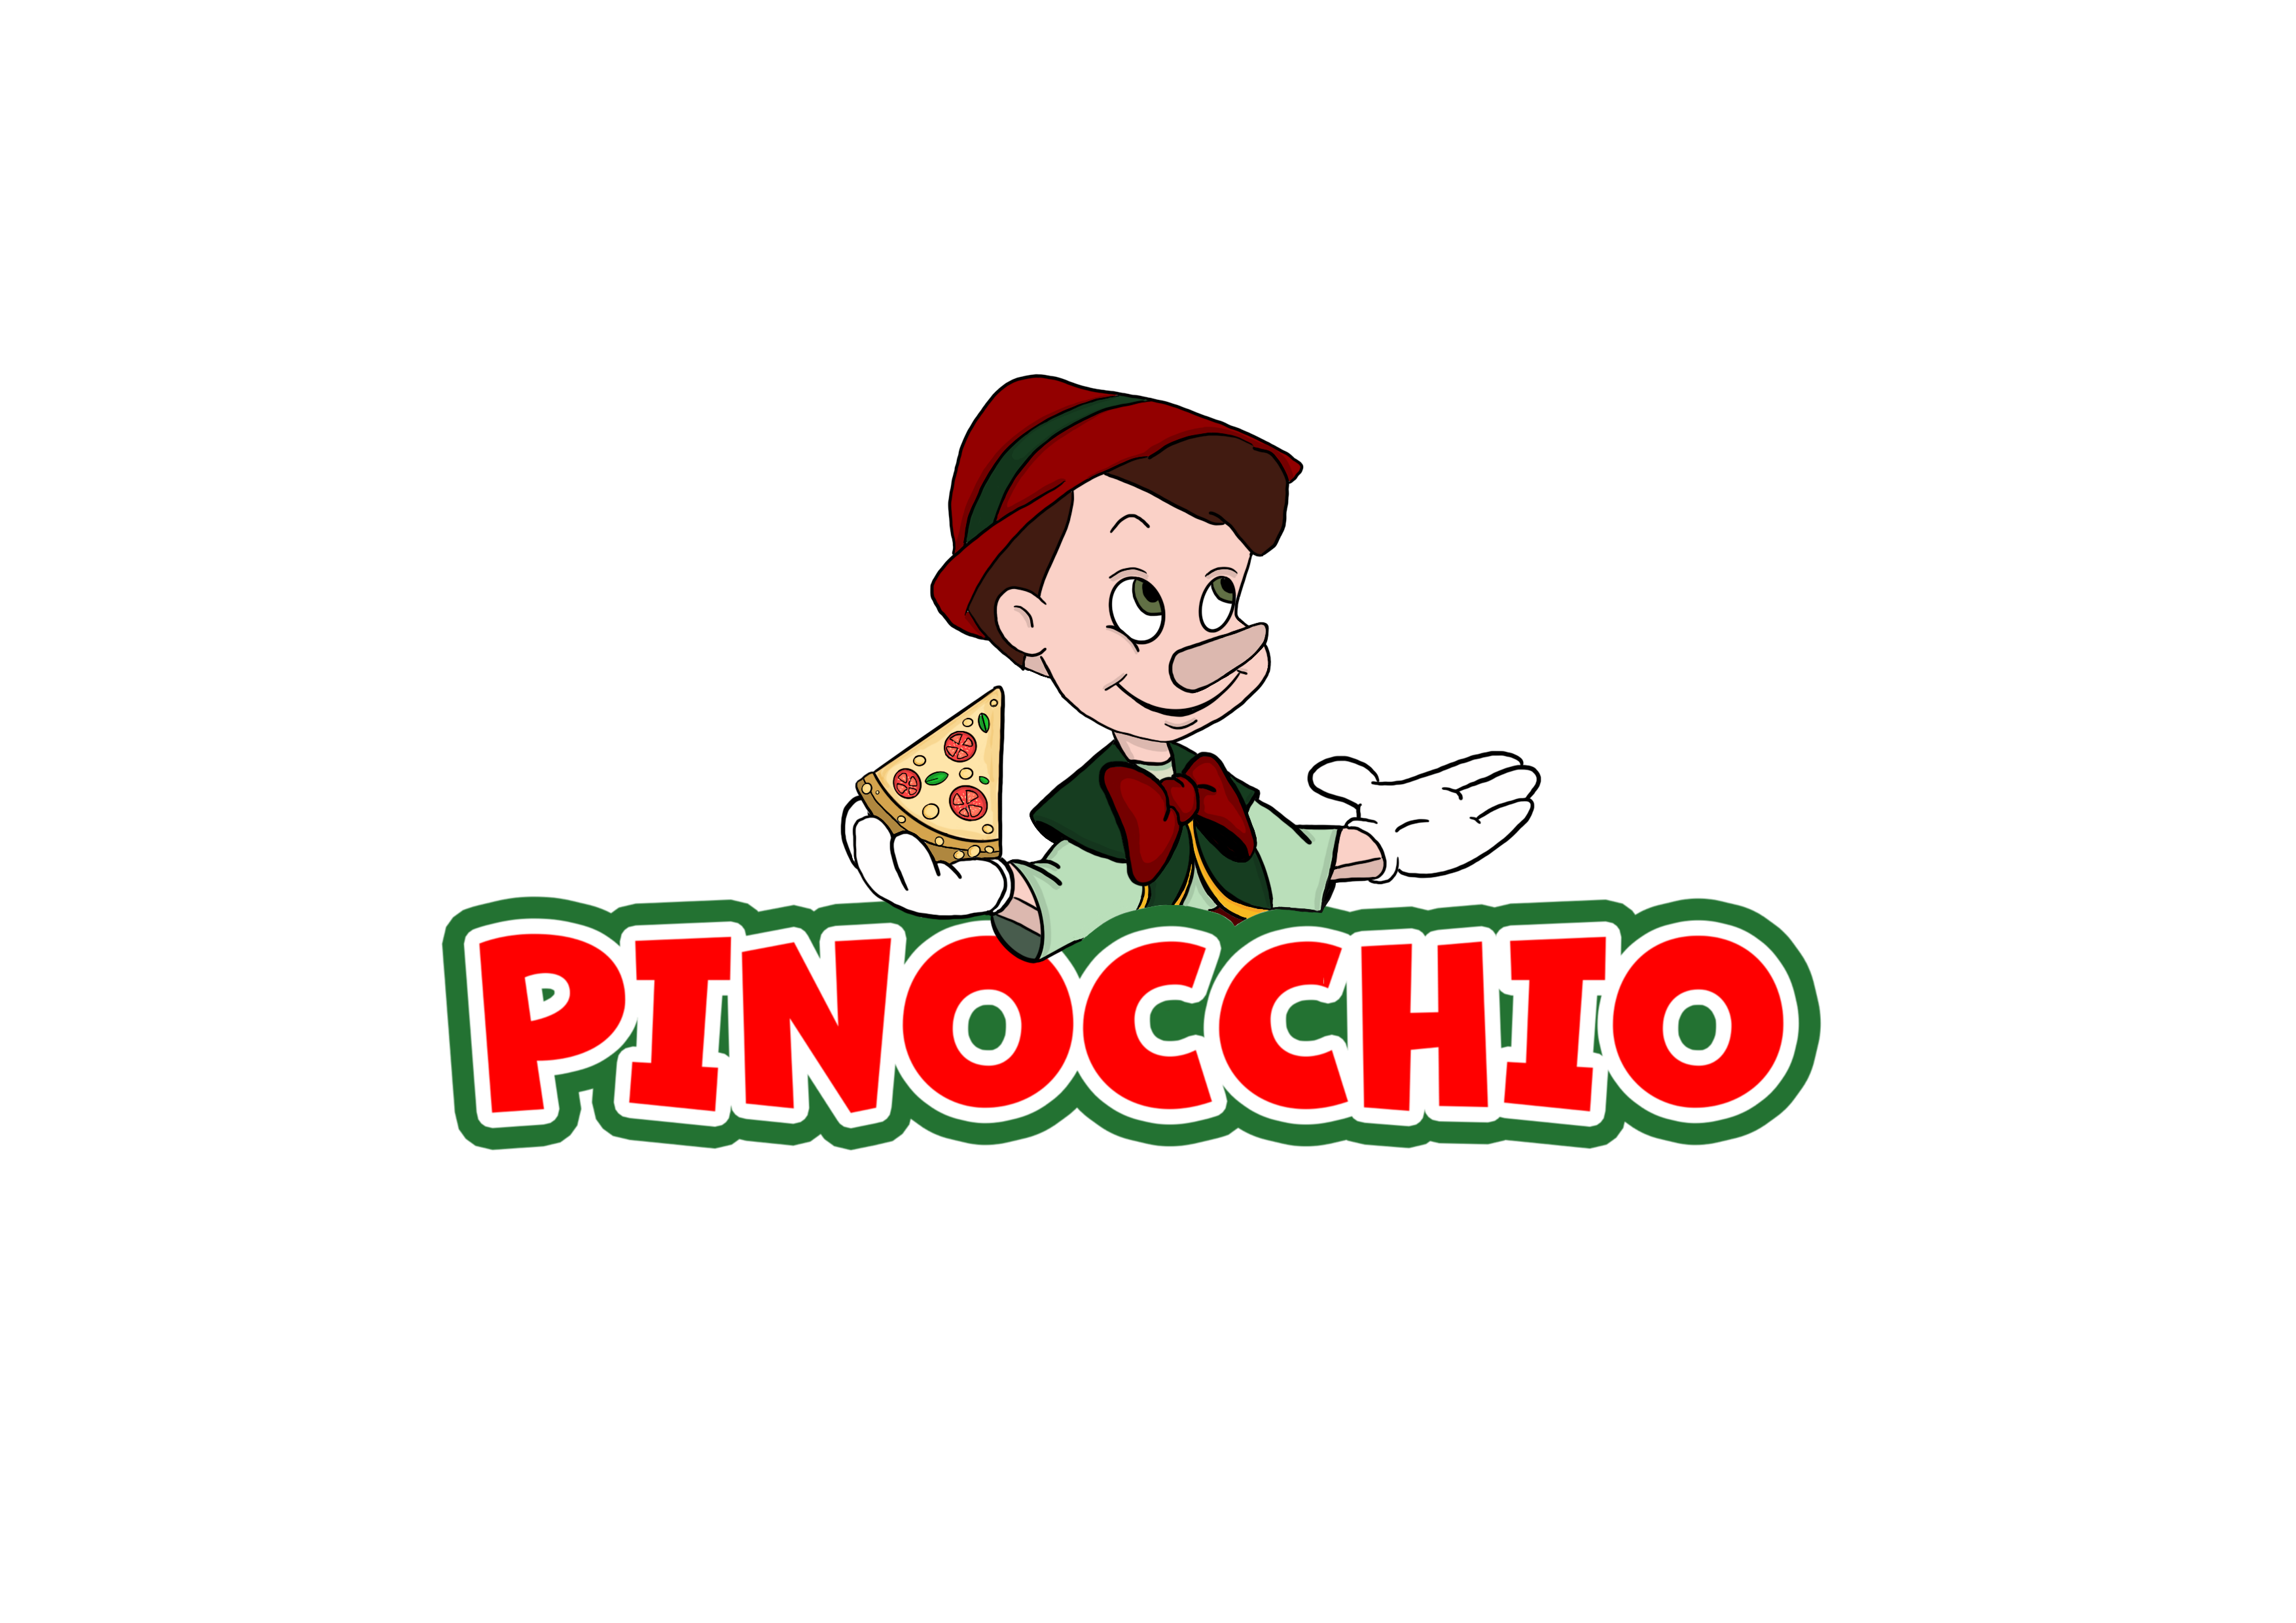 Pinocchio Pizzaria